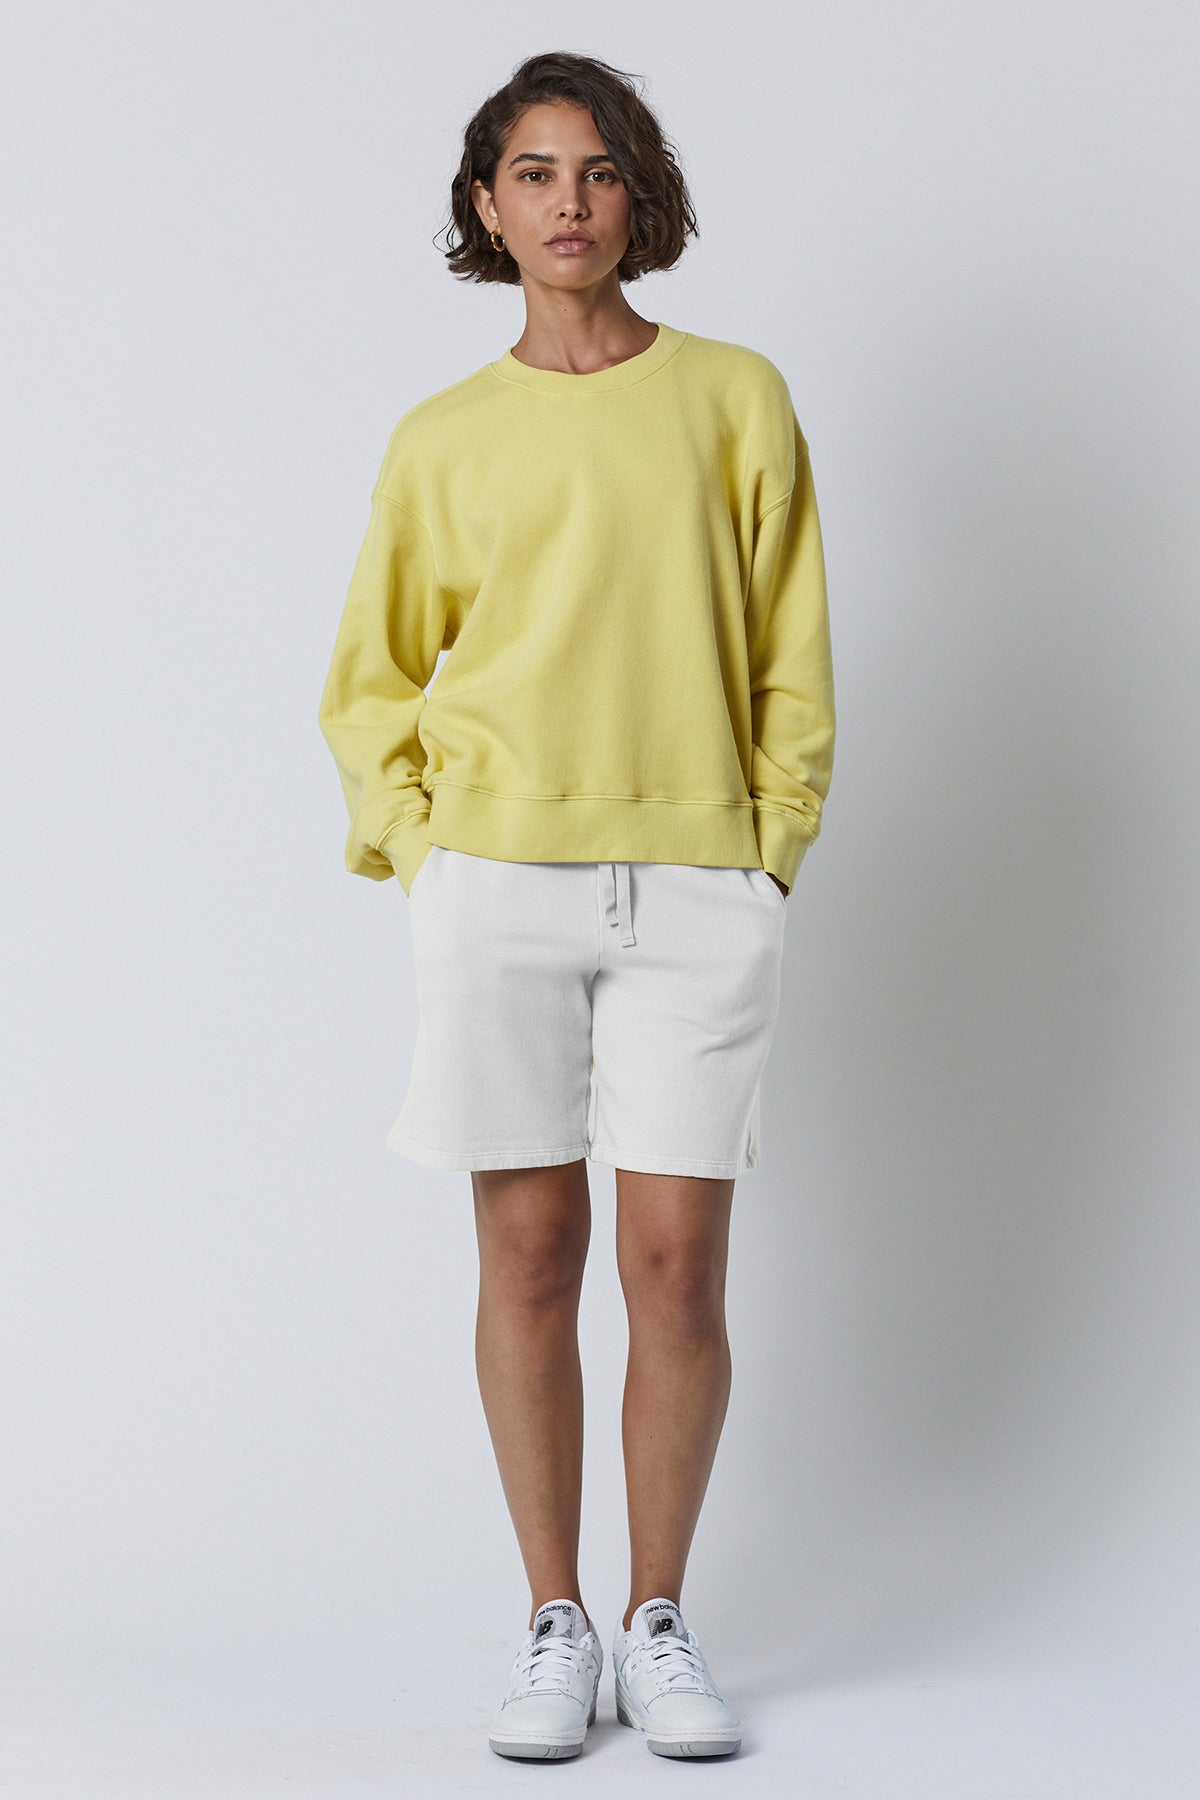 The model is wearing a Velvet by Jenny Graham LAGUNA SWEATSHORT and white shorts.-26041220923585